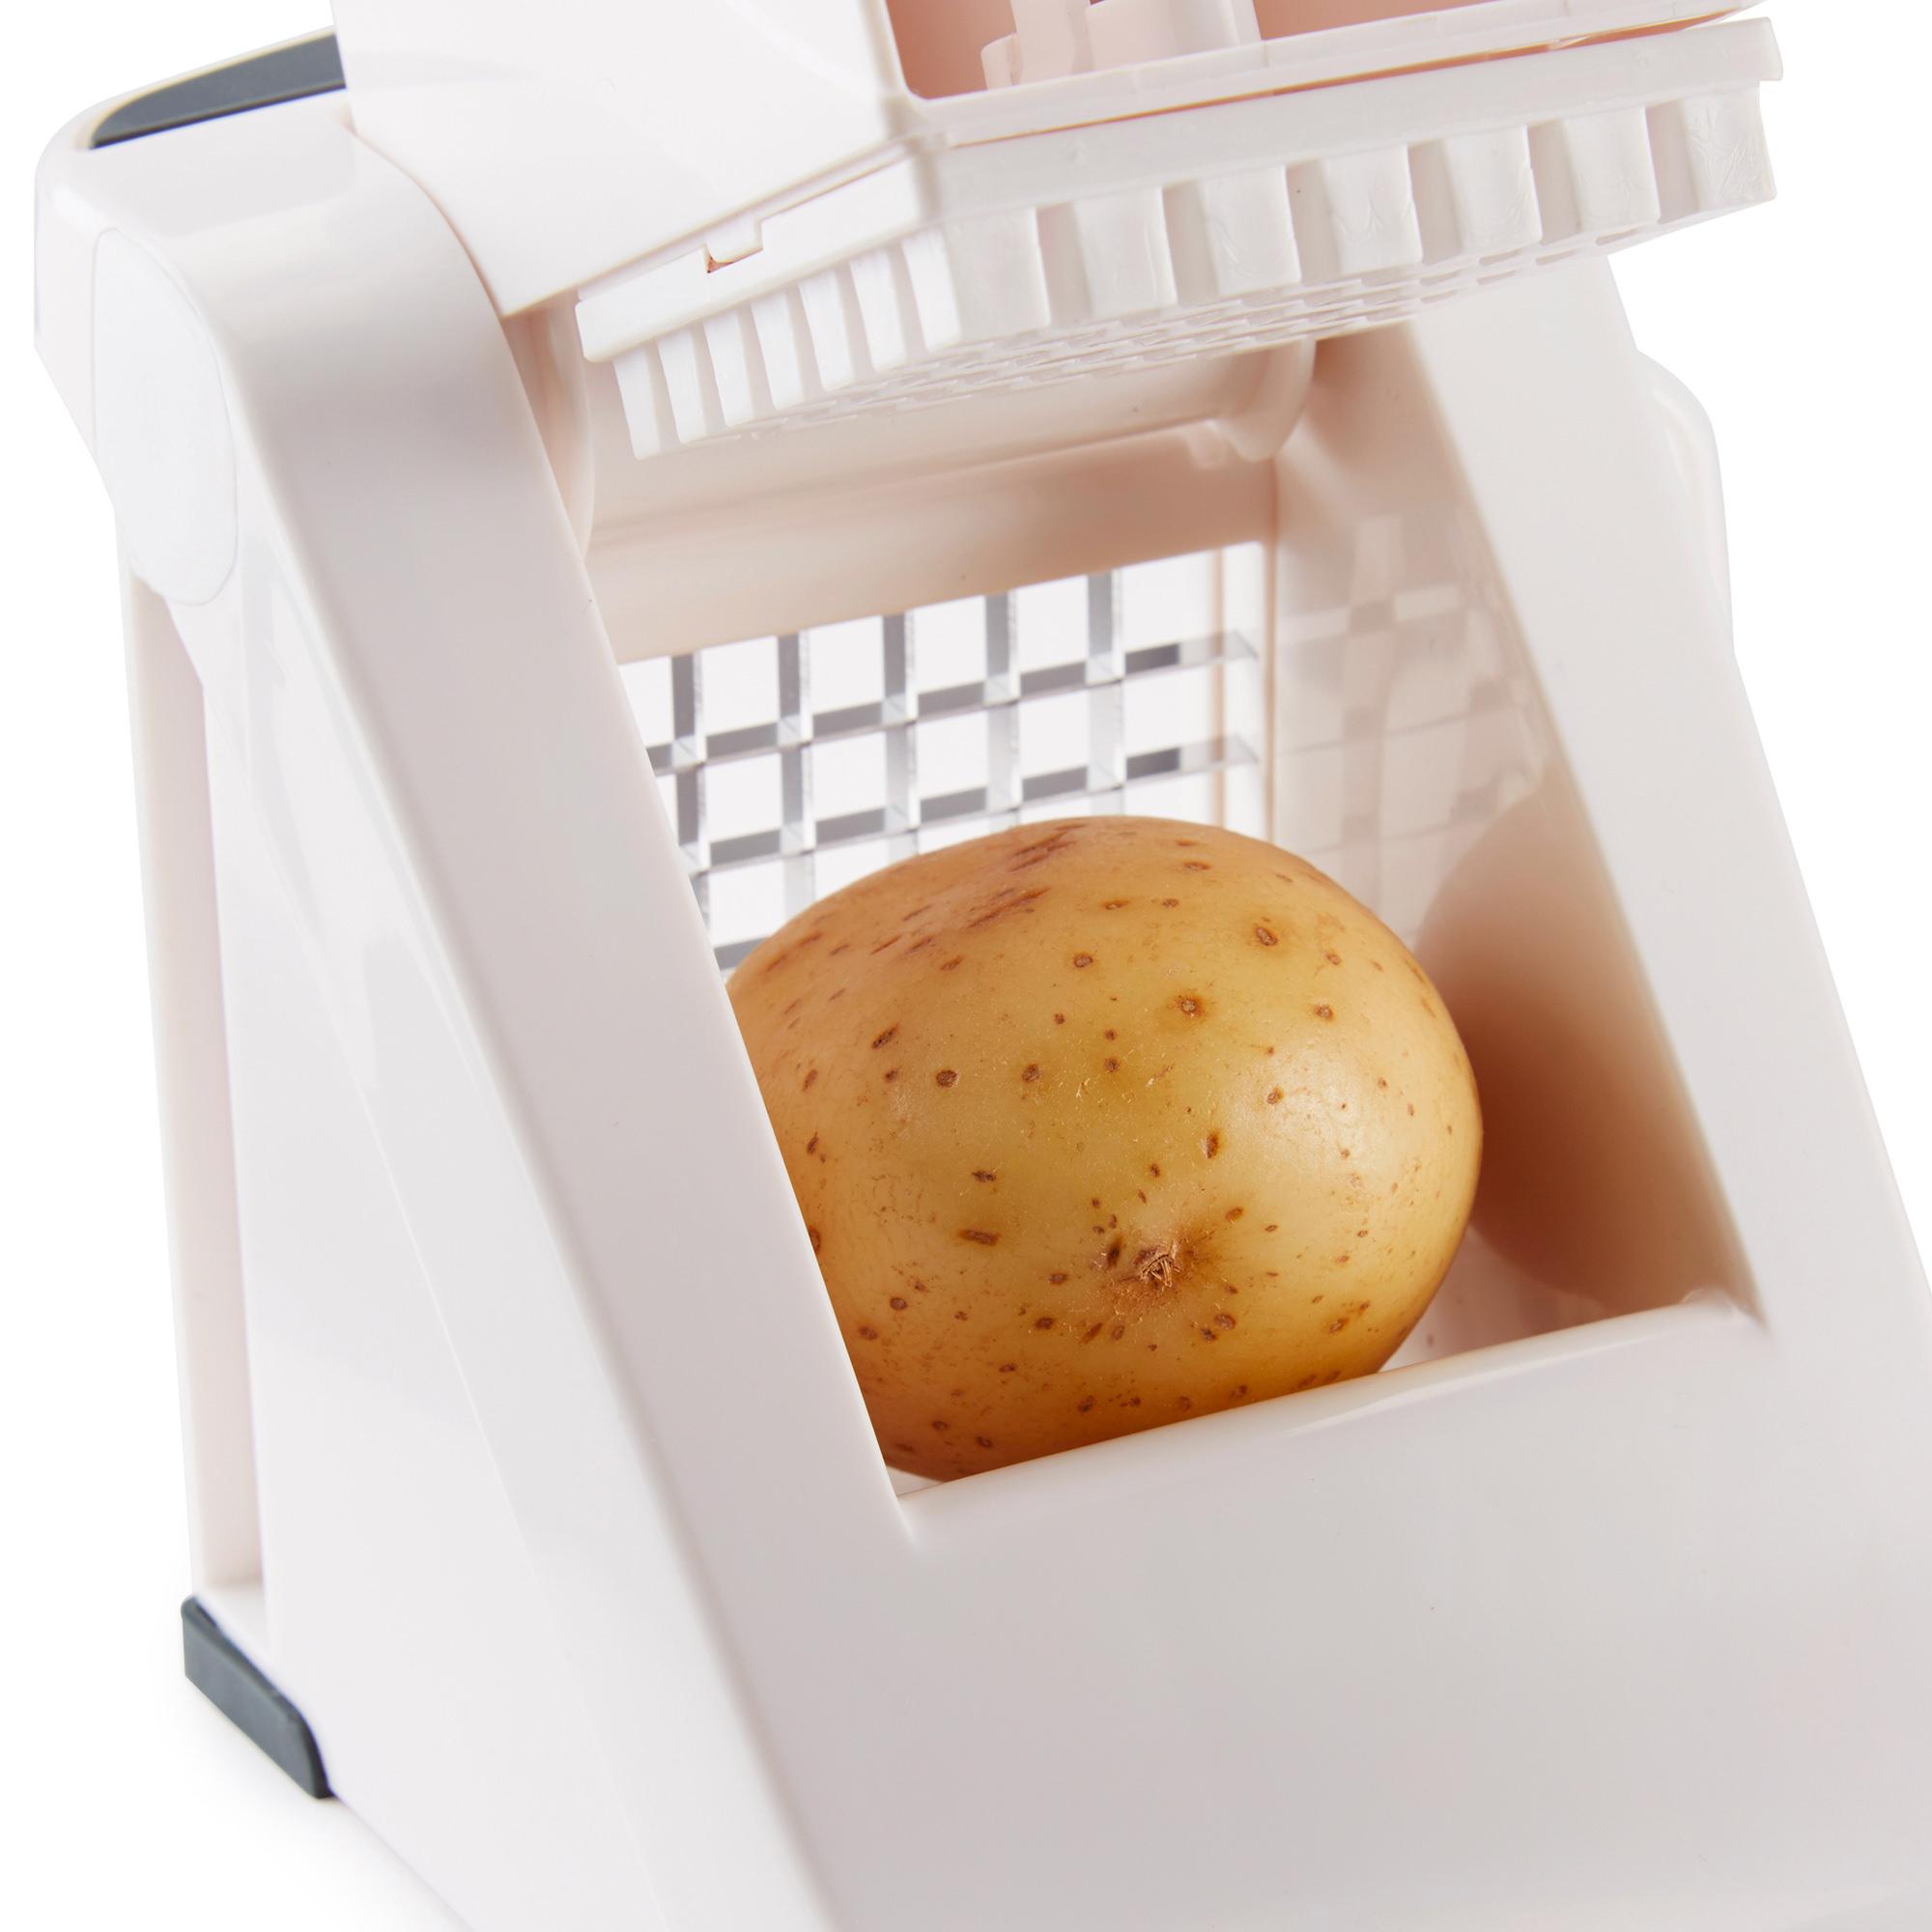 Zyliss Potato & Vegetable Chipper Image 3